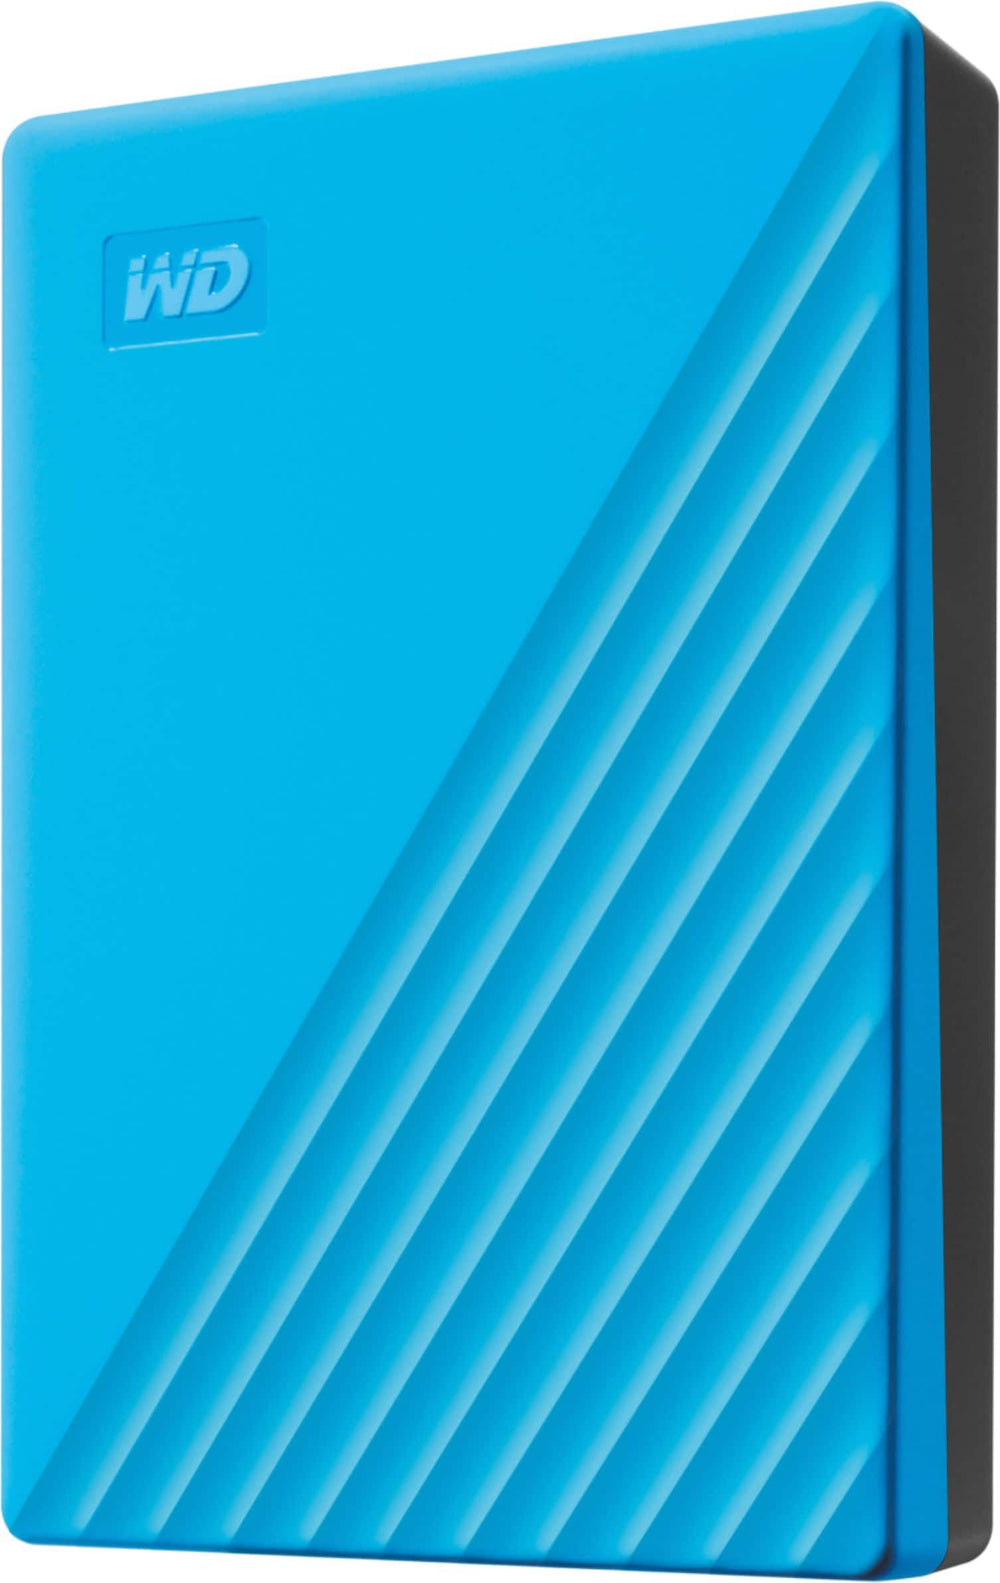 WD - My Passport 4TB External USB 3.0 Portable Hard Drive - Blue_1